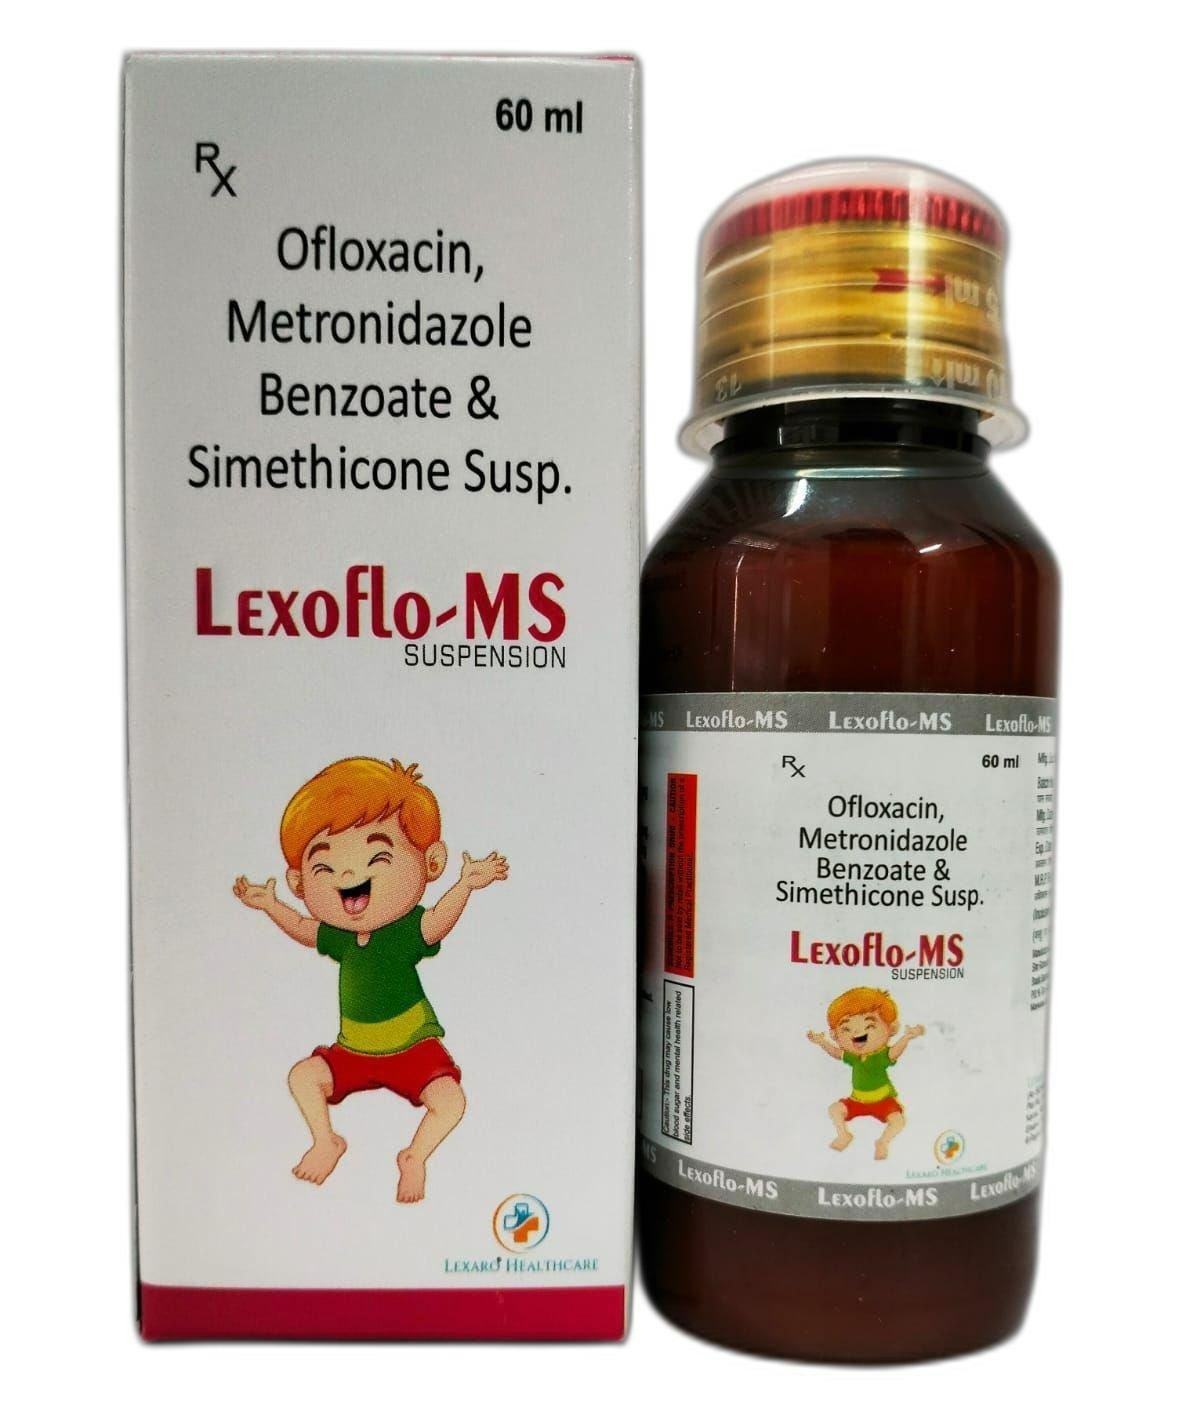 ofloxacin 50mg& metronidazole 120mg
+simethicone 10mg sus